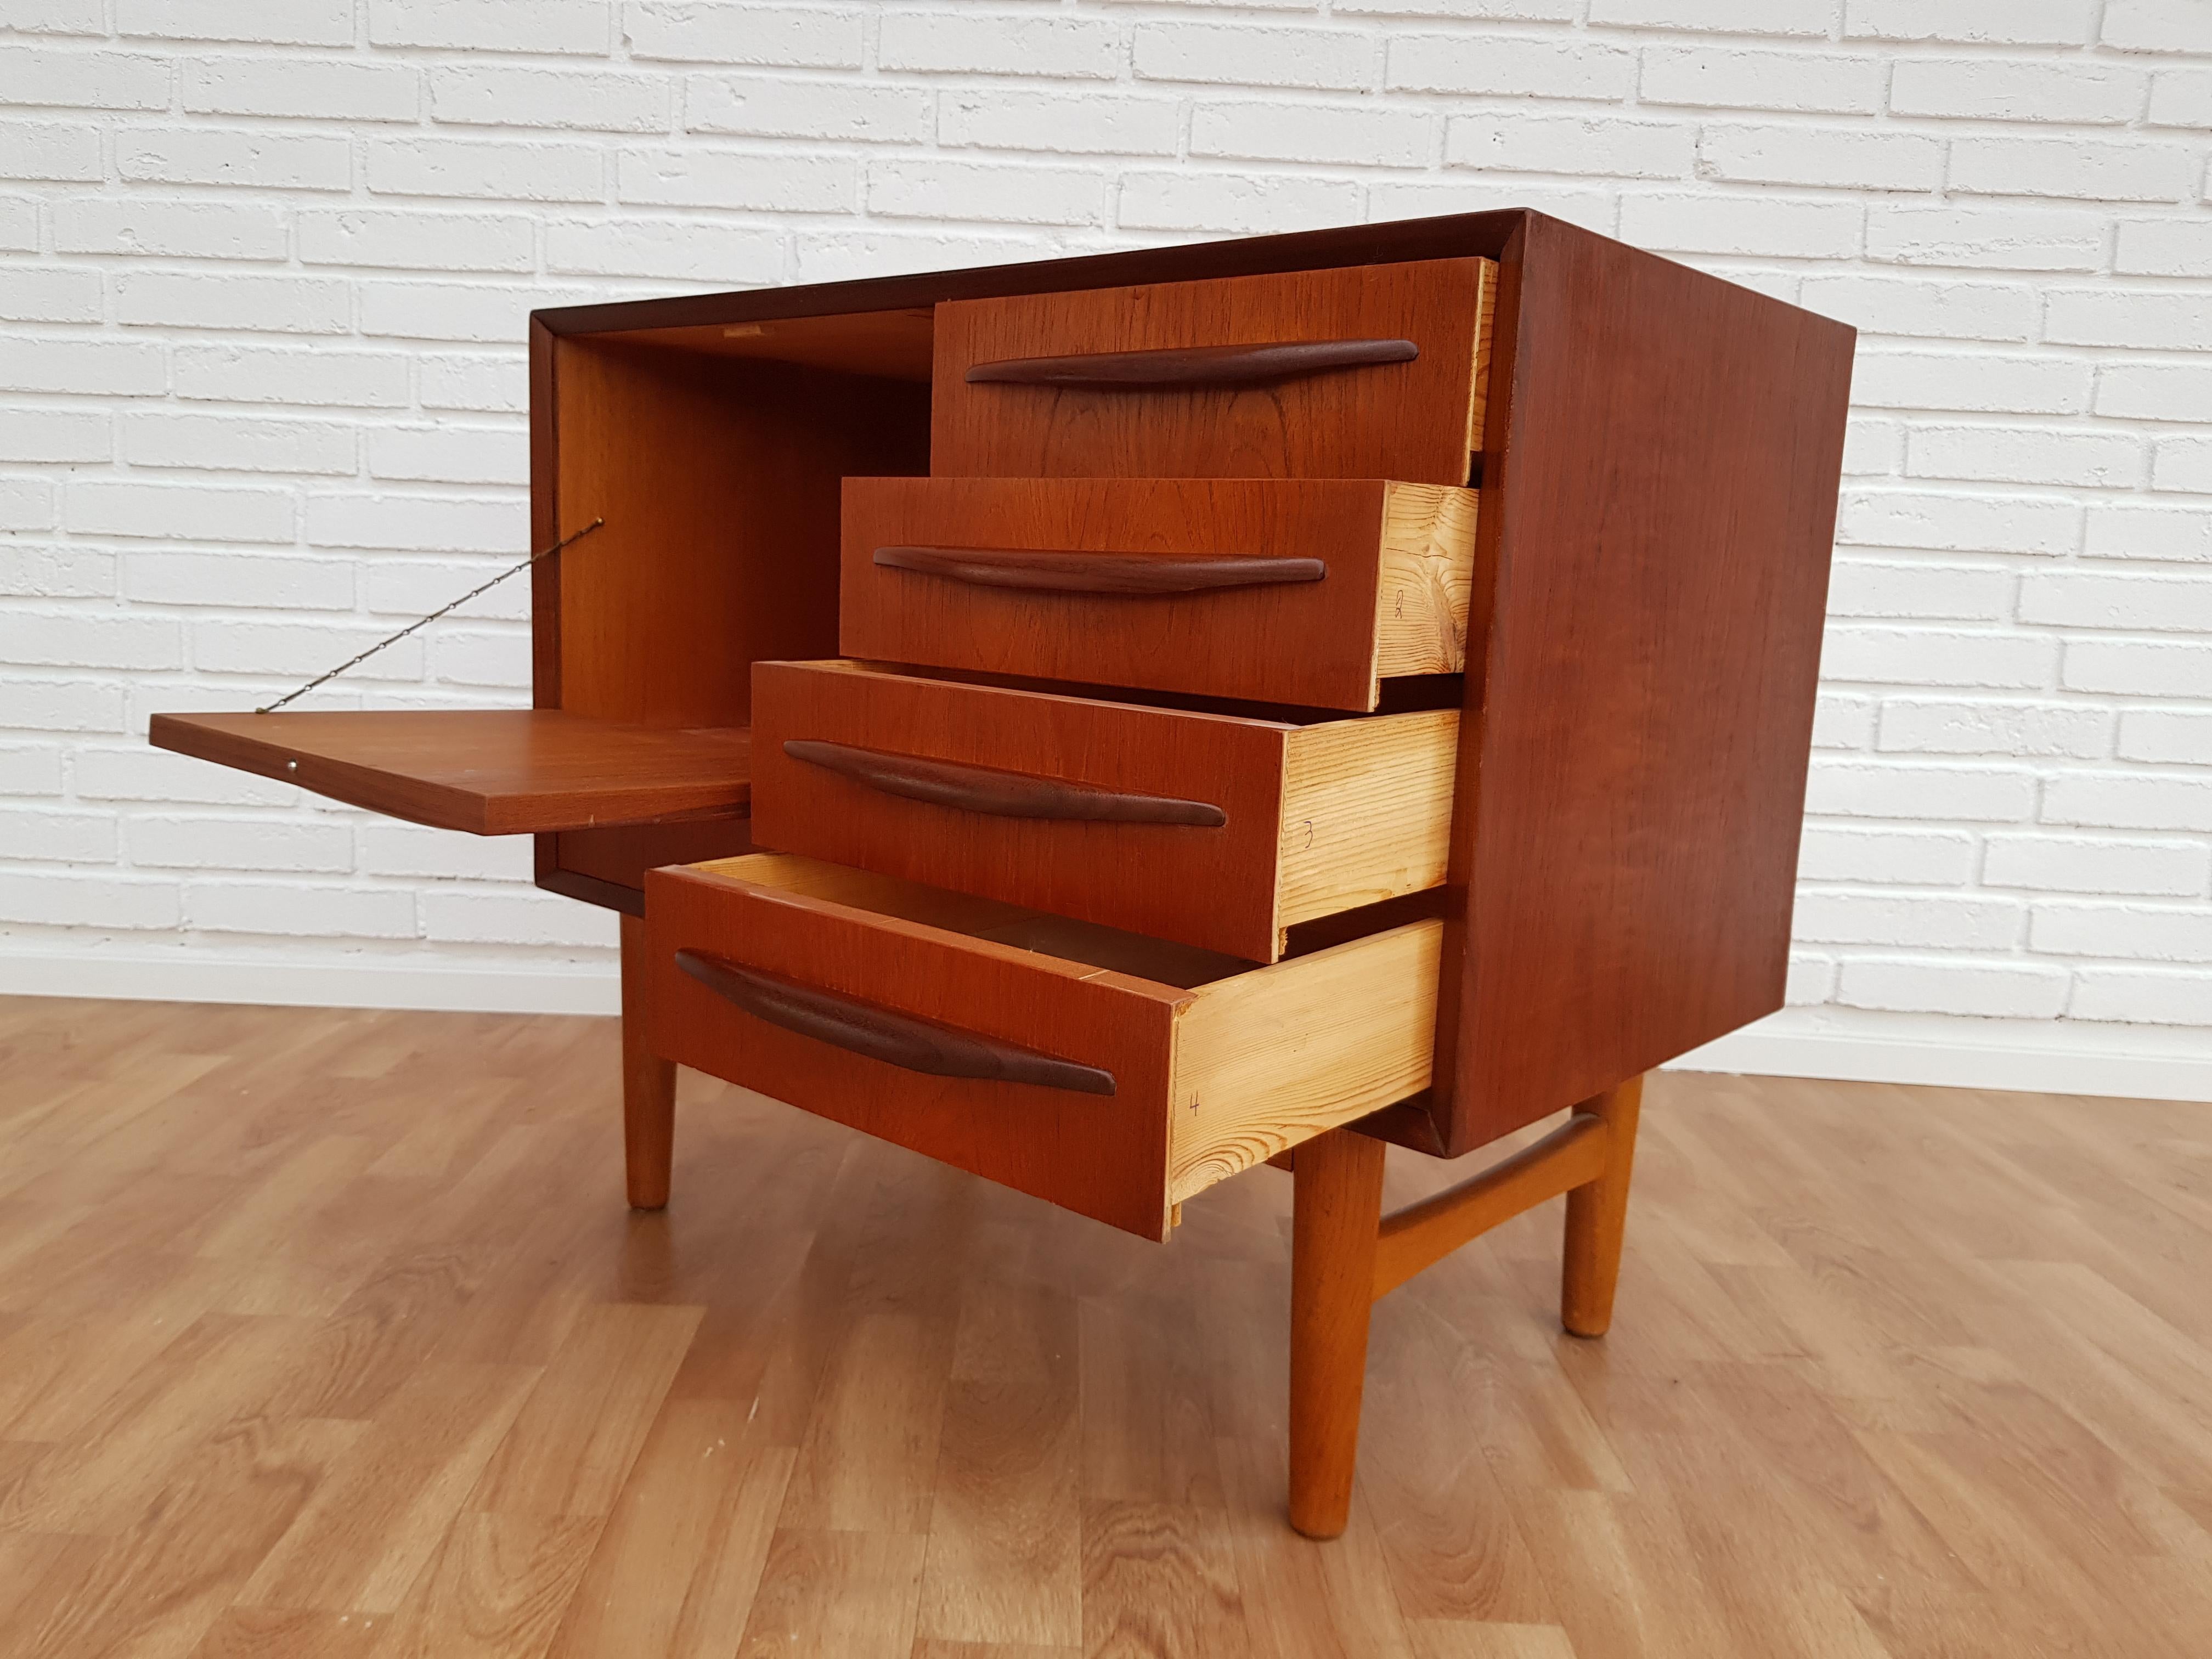 Scandinavian Modern Vintage Chest, Danish Design, Teak Wood, 1960s For Sale